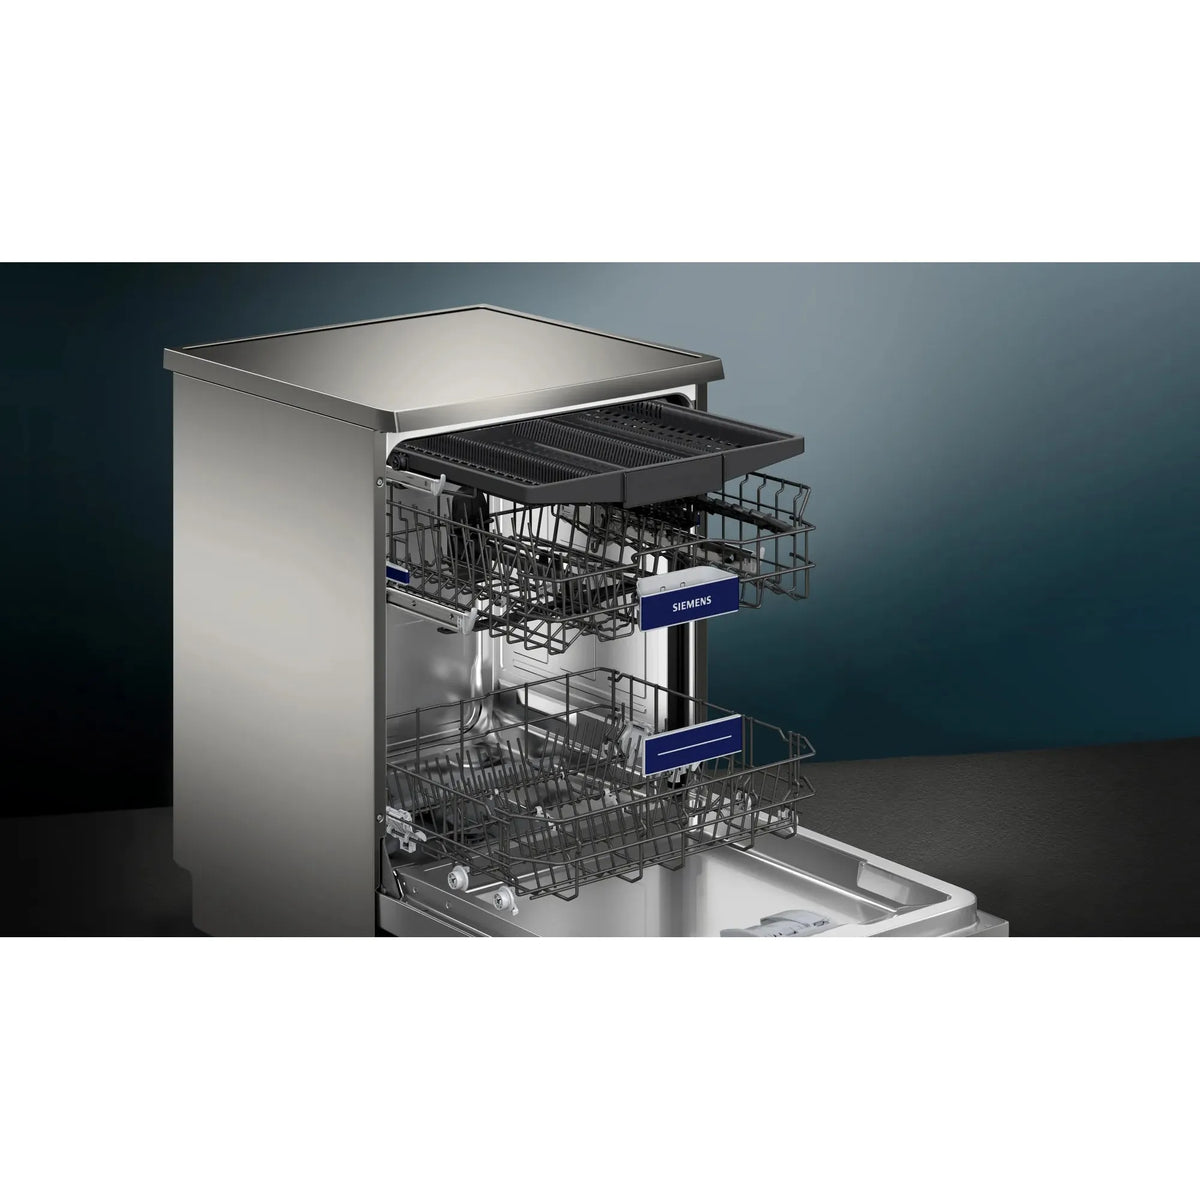 Siemens IQ300 60CM 14 Place Freestanding Standard Dishwasher - Silver Inox | SN23HI00MG from Siemens - DID Electrical